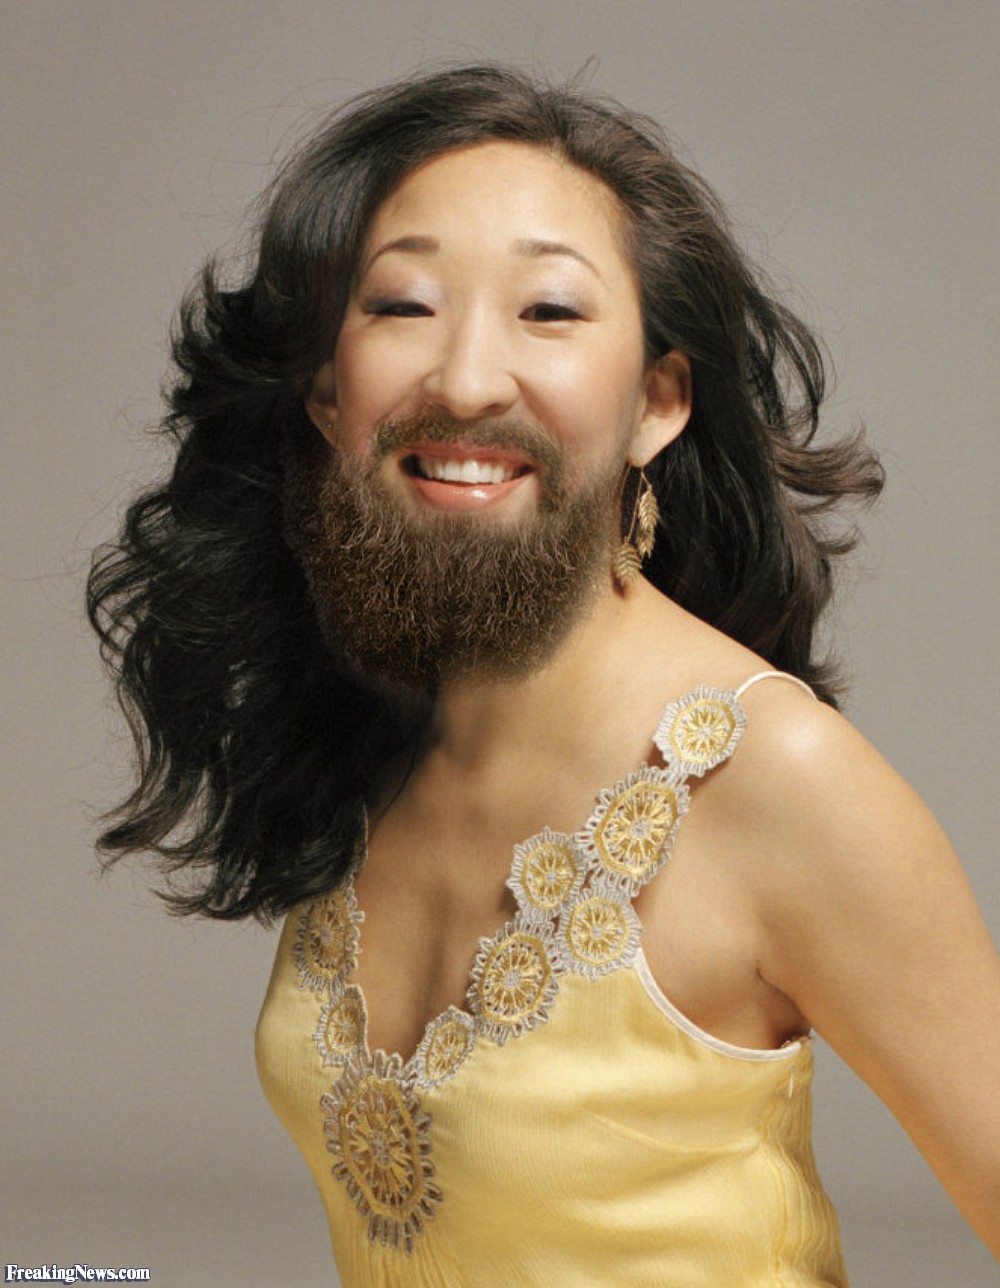 Dr-Christina-Yang-with-a-Beard-31693.jpg